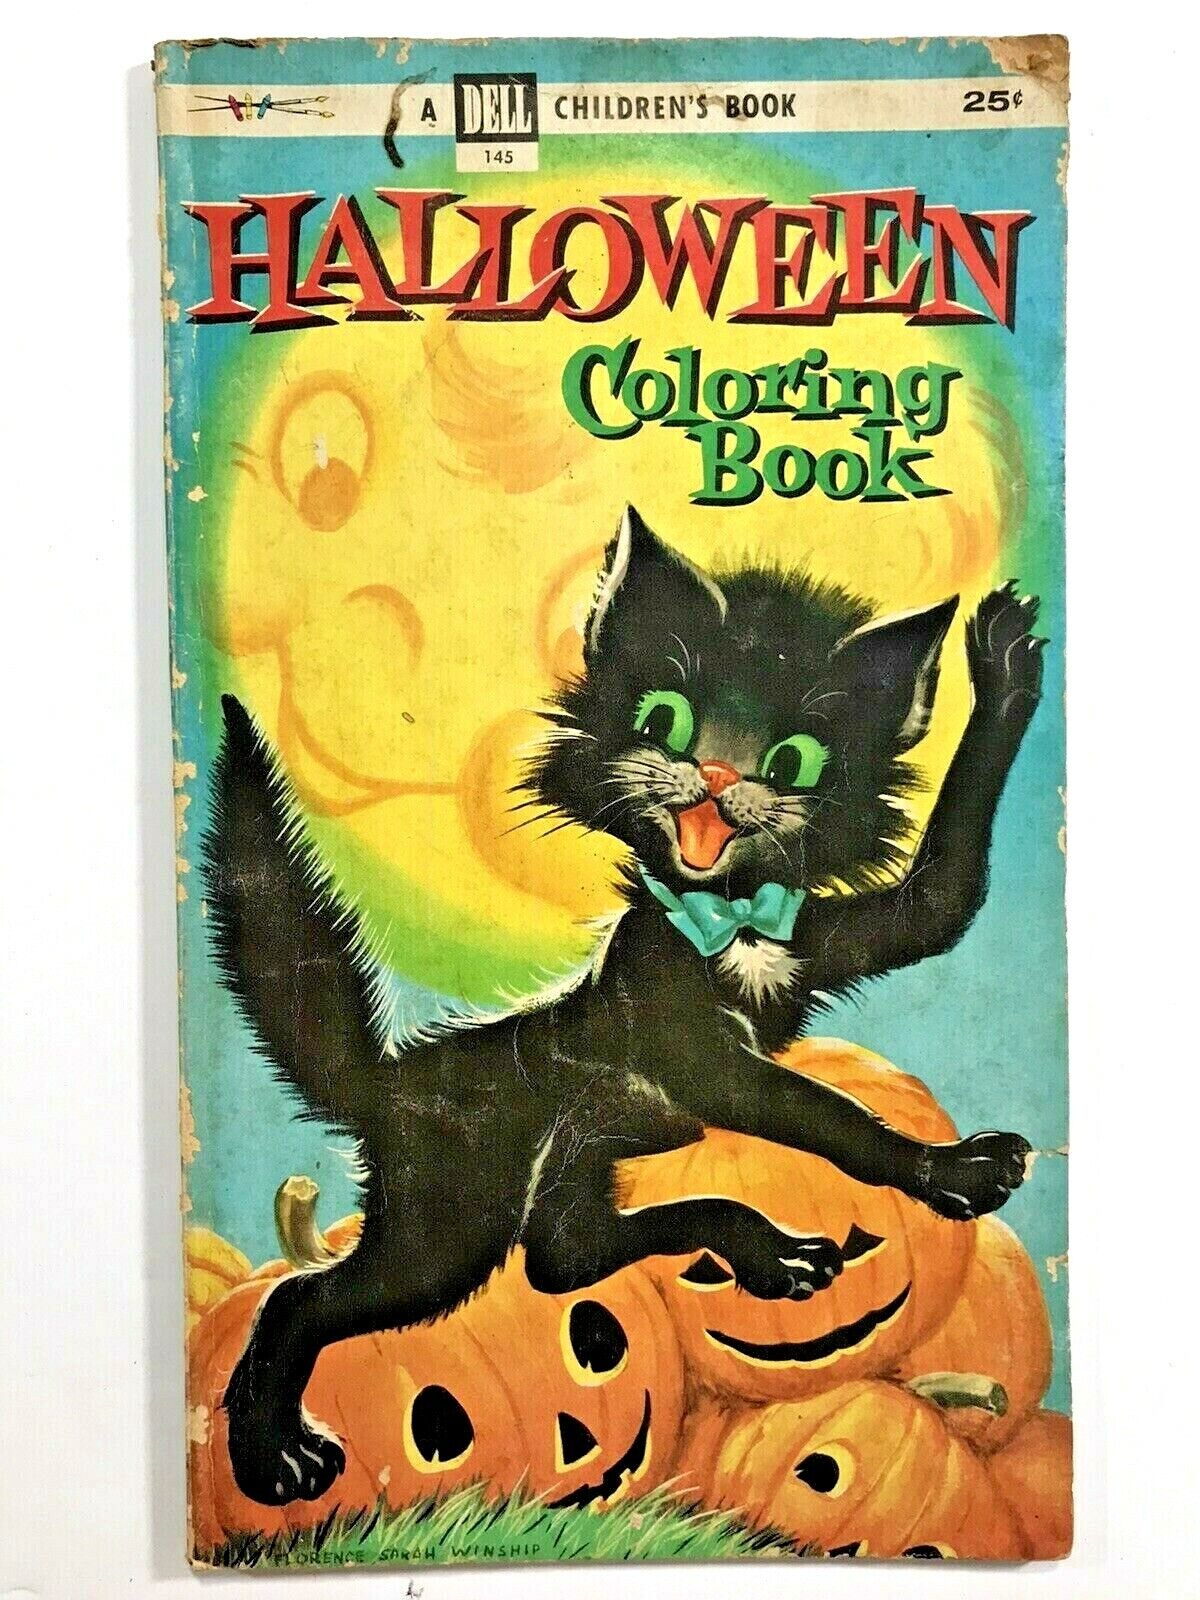 RARE 1955 Halloween Children's Coloring Book Black Cat Jack o 'Lantern Cover Art